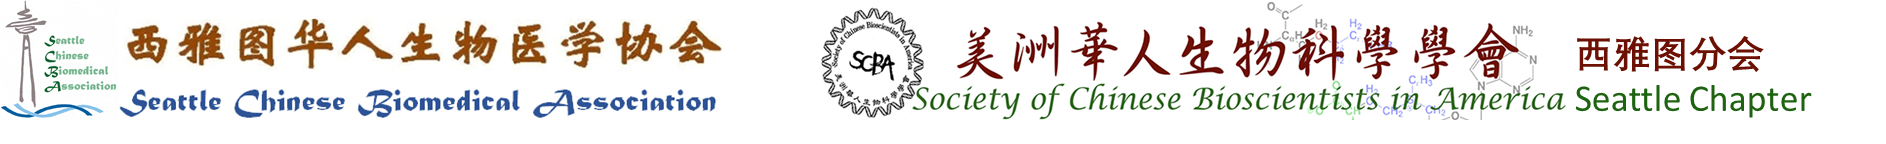 Seattle Chinese Biomedical Association Logo